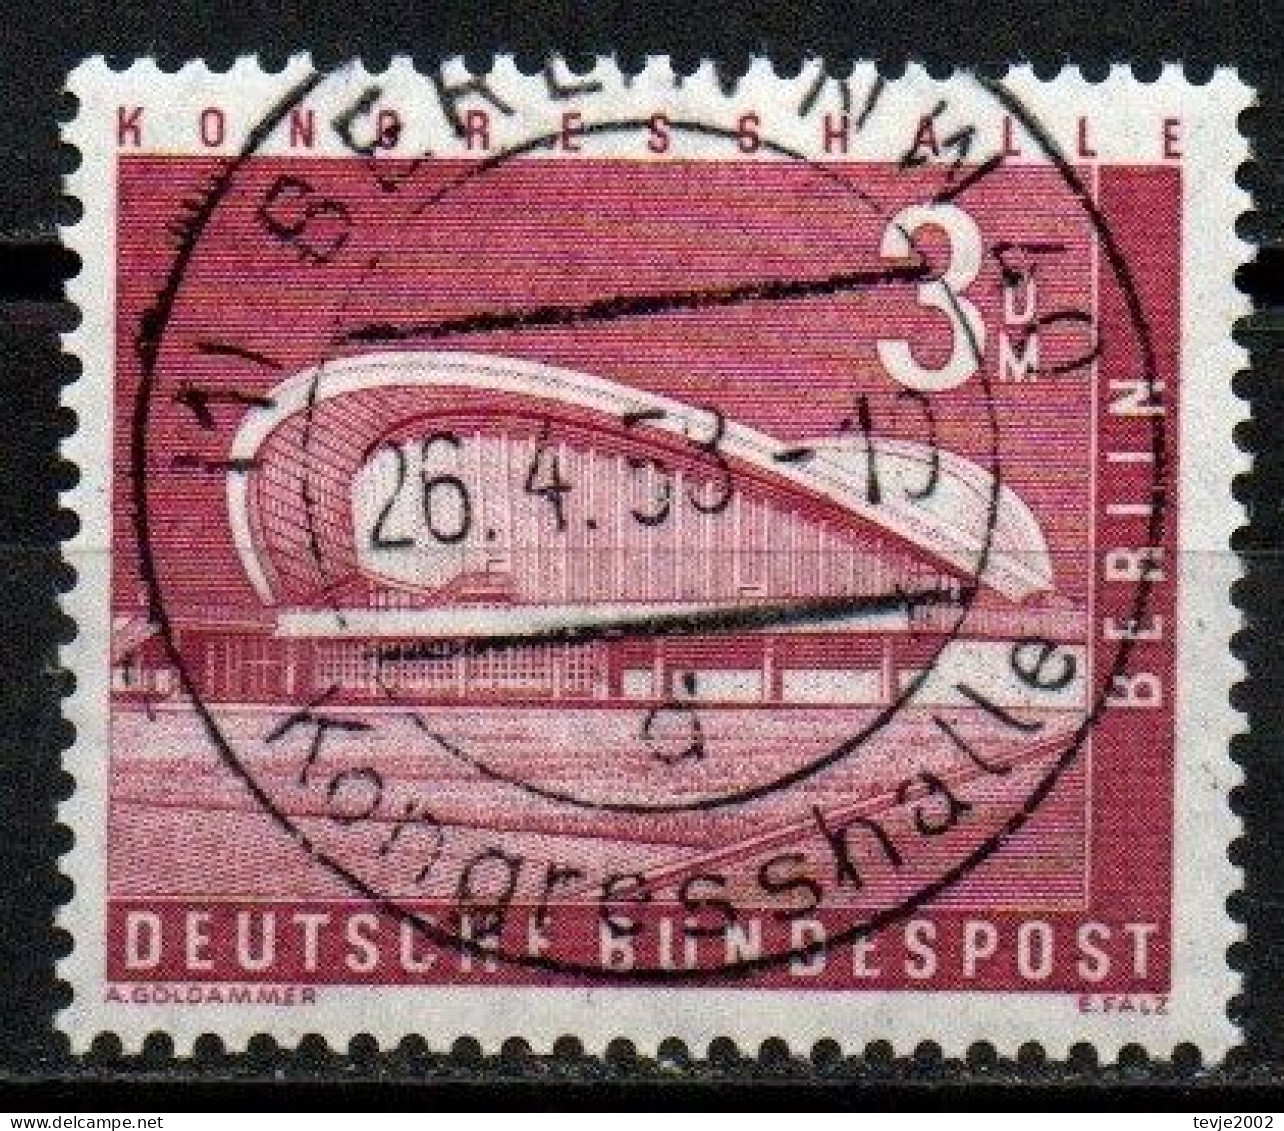 Berlin 1958 - Mi.Nr. 154 - Gestempelt Used - Used Stamps